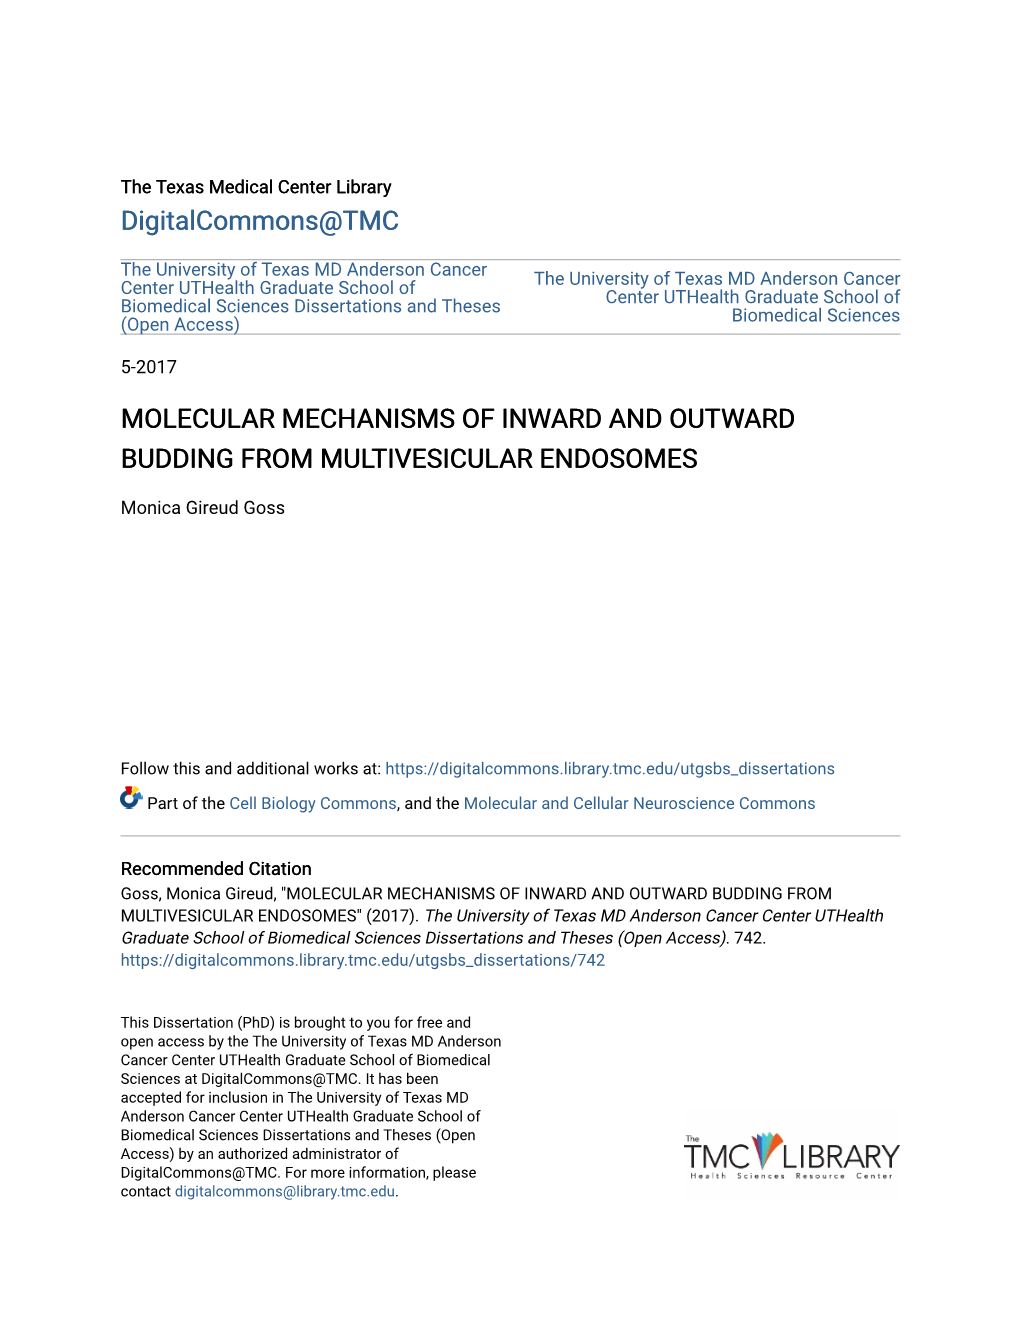 Molecular Mechanisms of Inward and Outward Budding from Multivesicular Endosomes